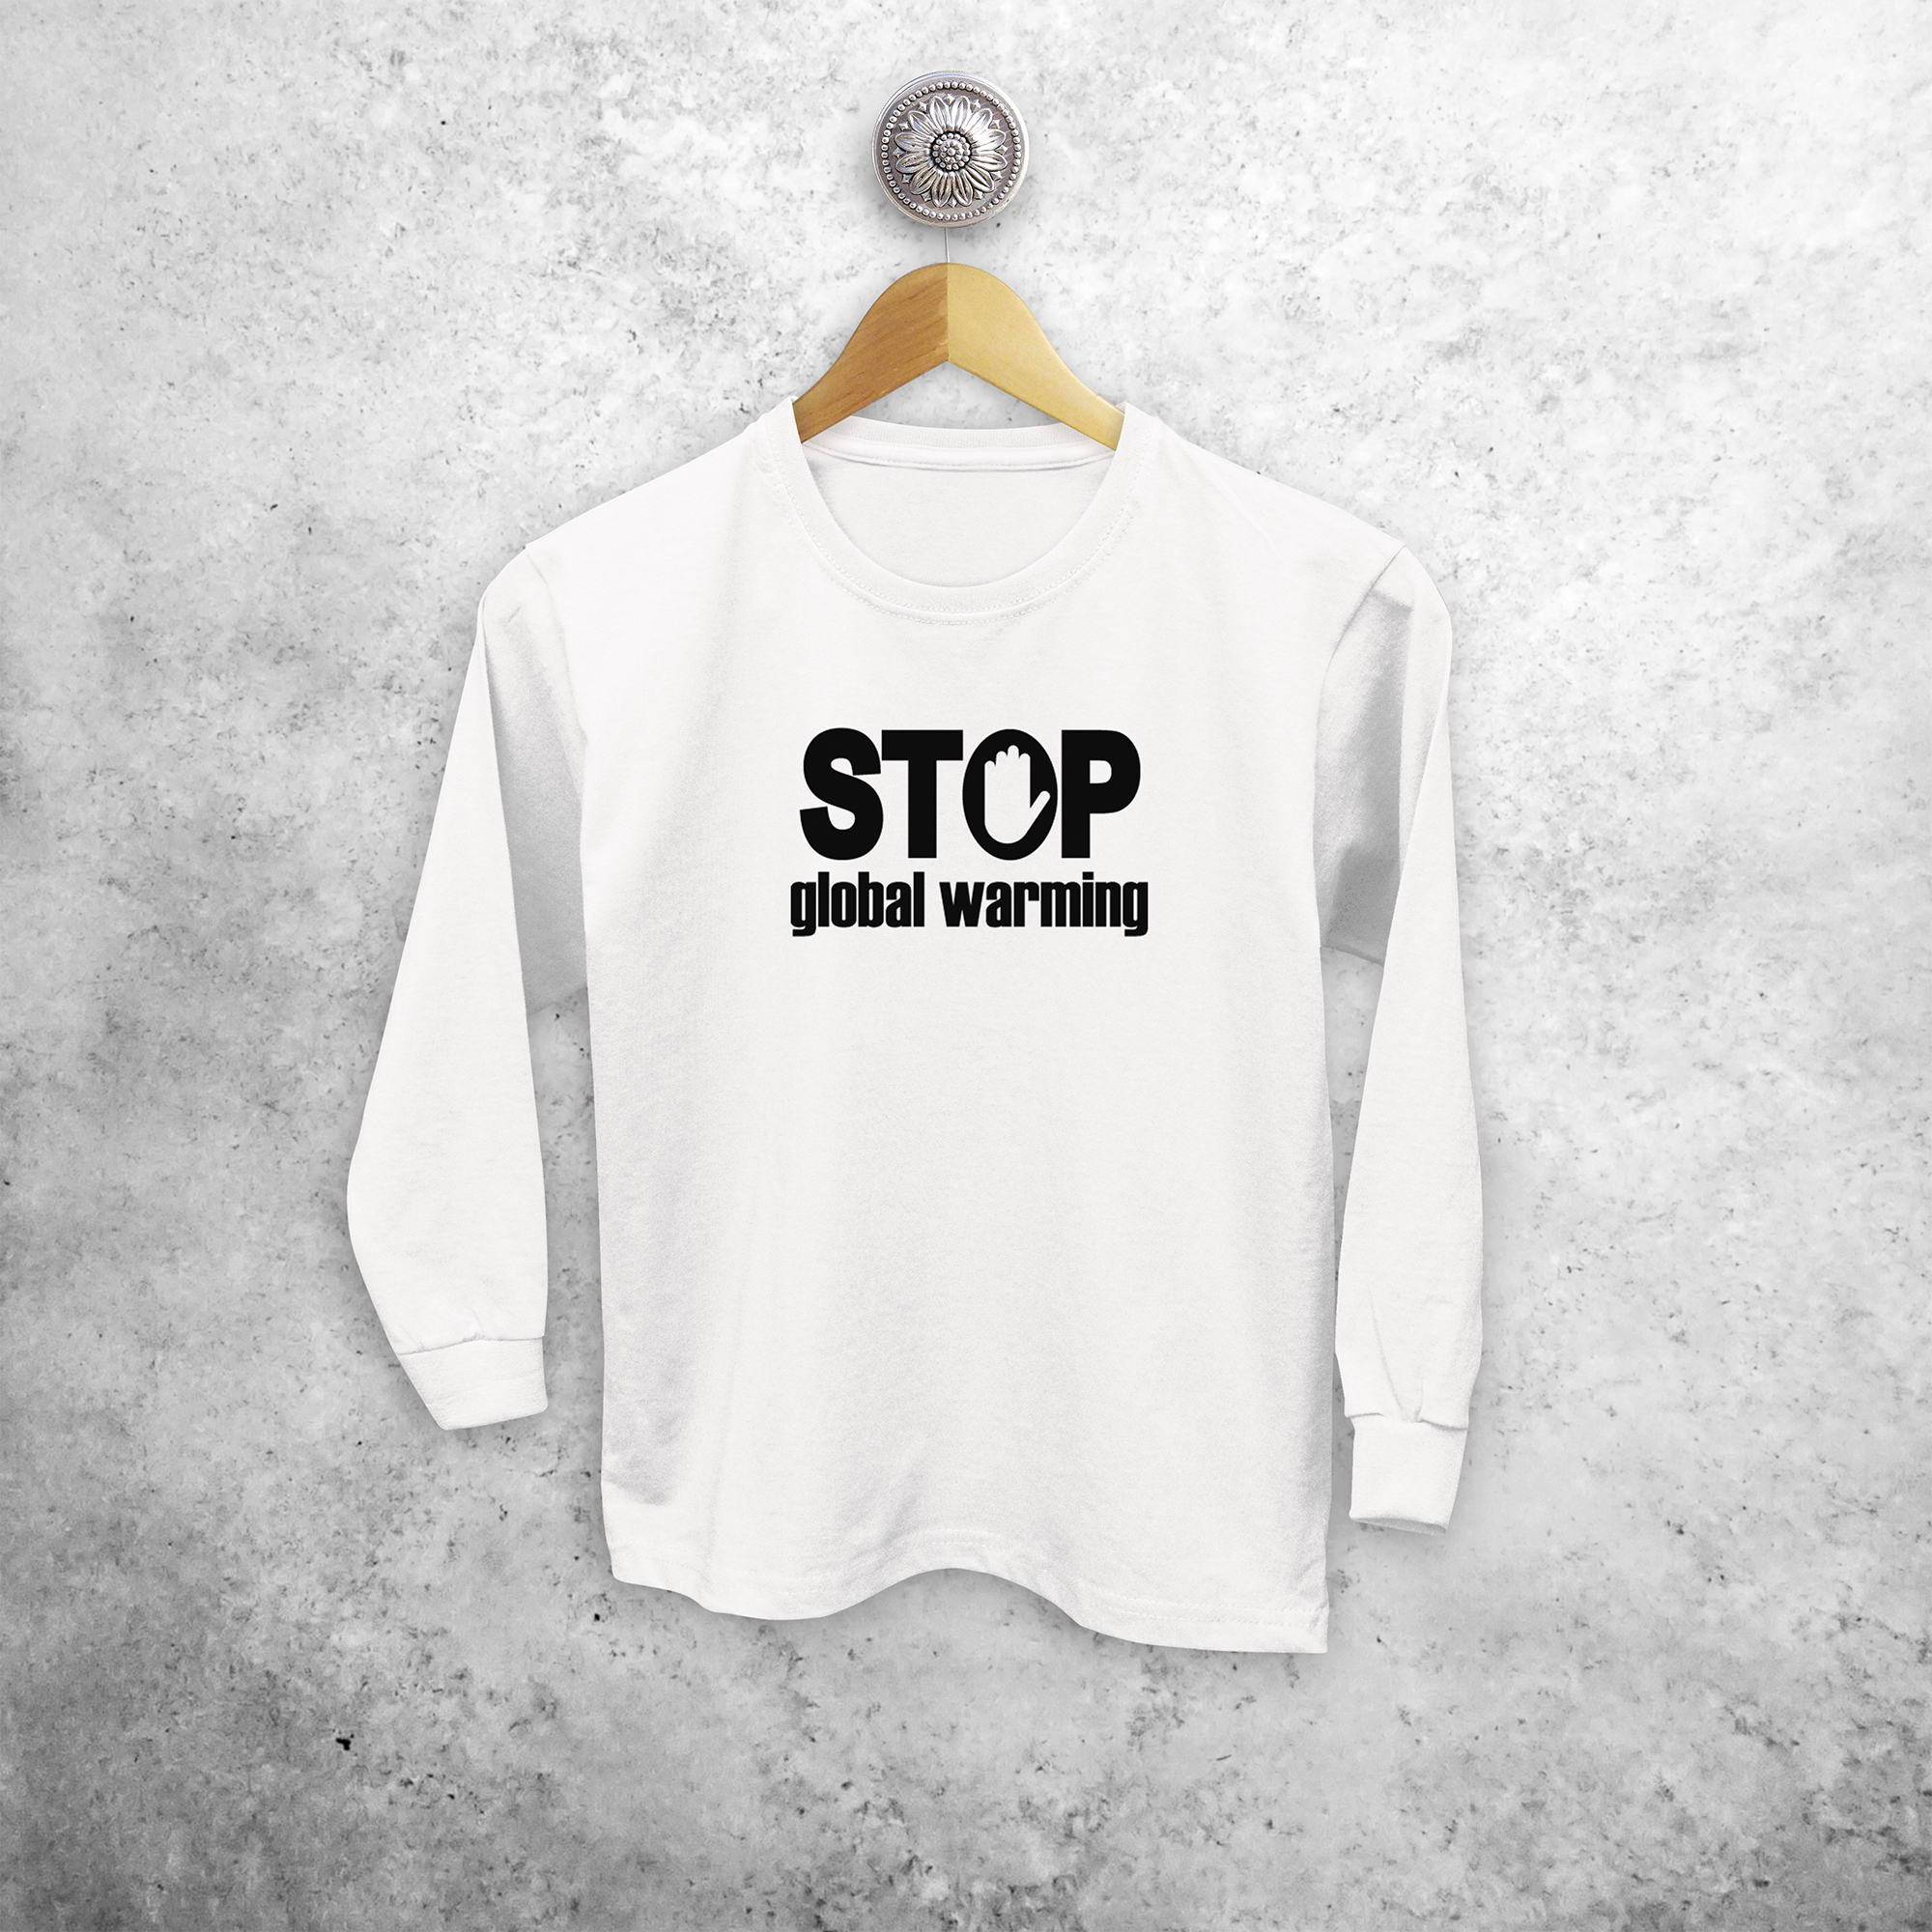 'Stop global warming' kids longsleeve shirt